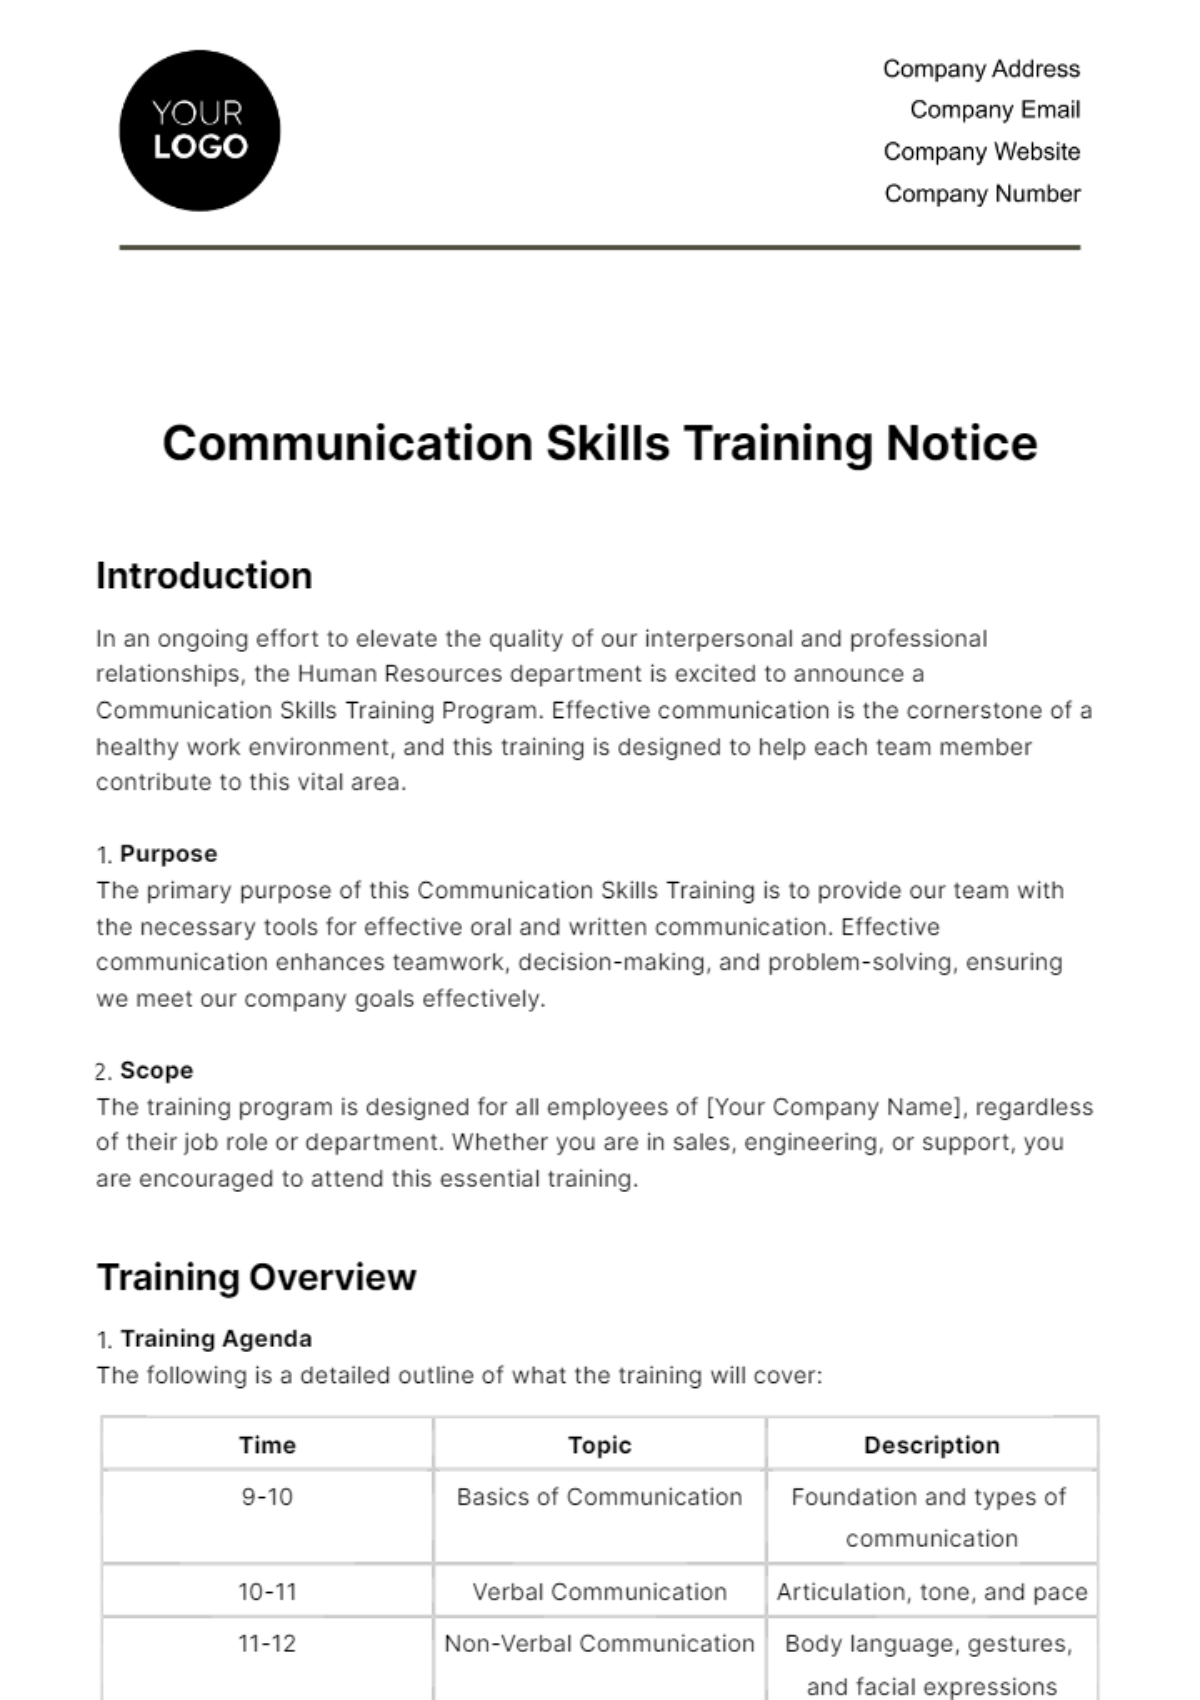 Free Communication Skills Training Notice HR Template